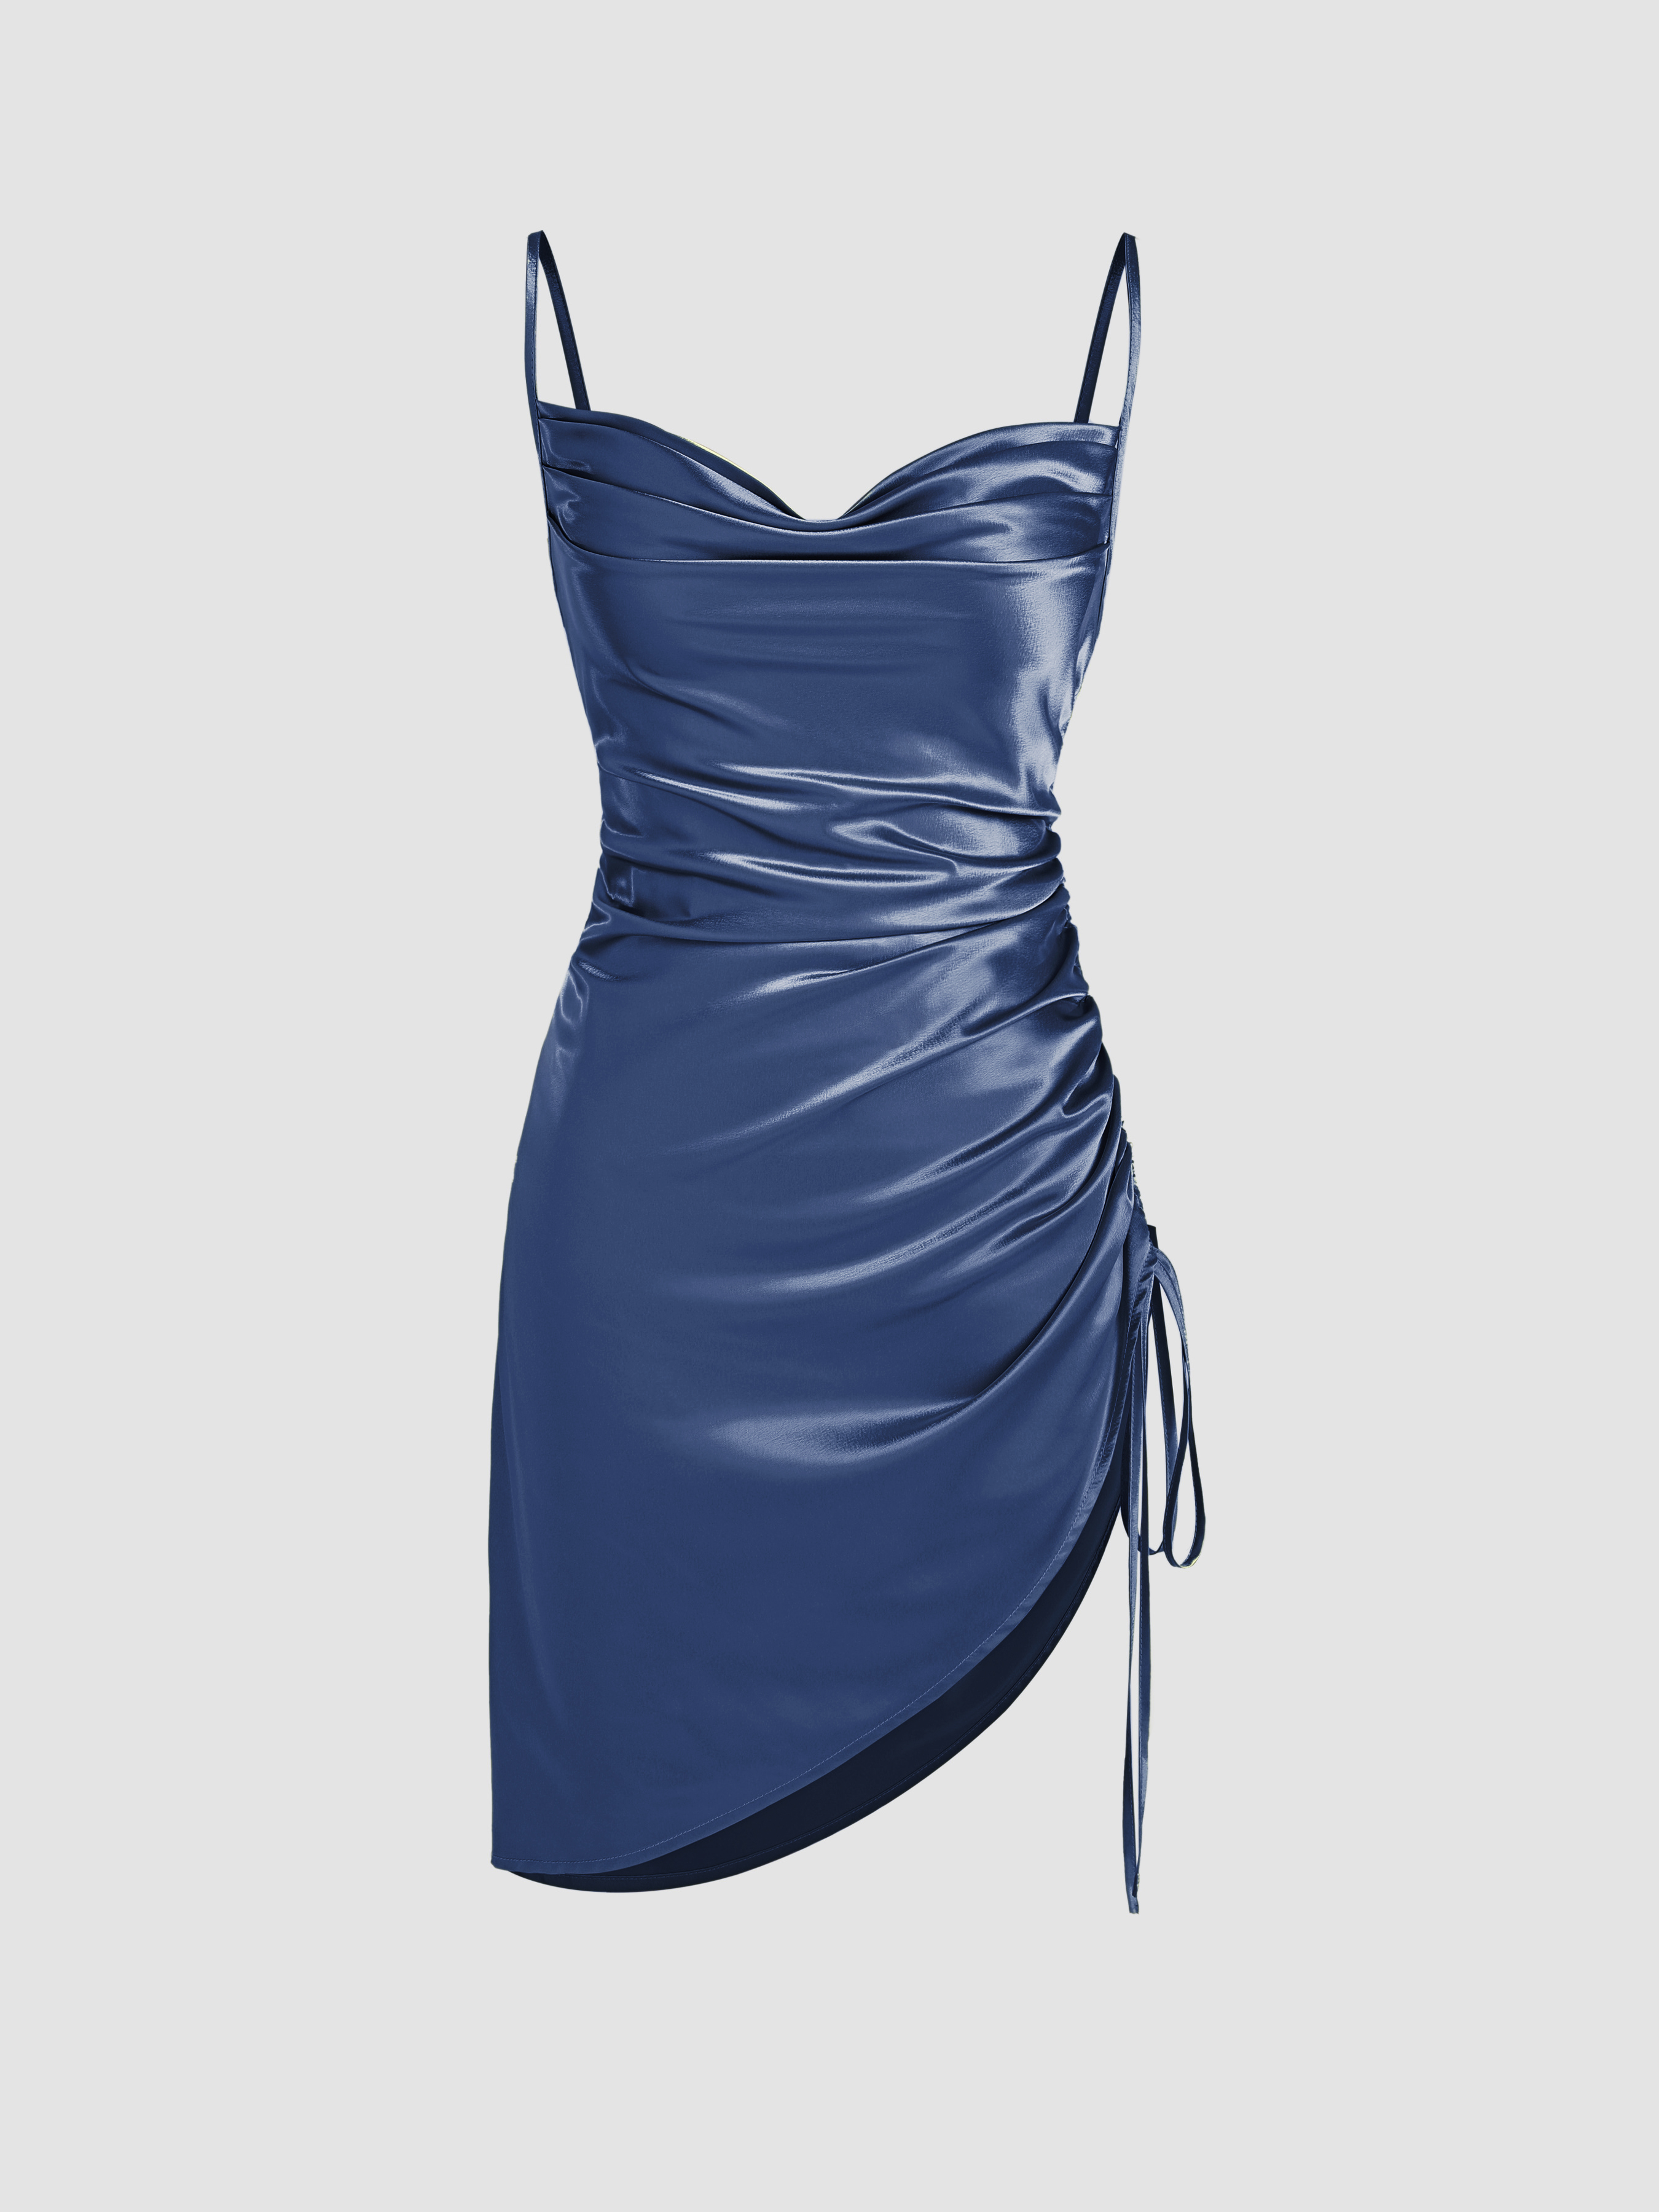 satin blue dress